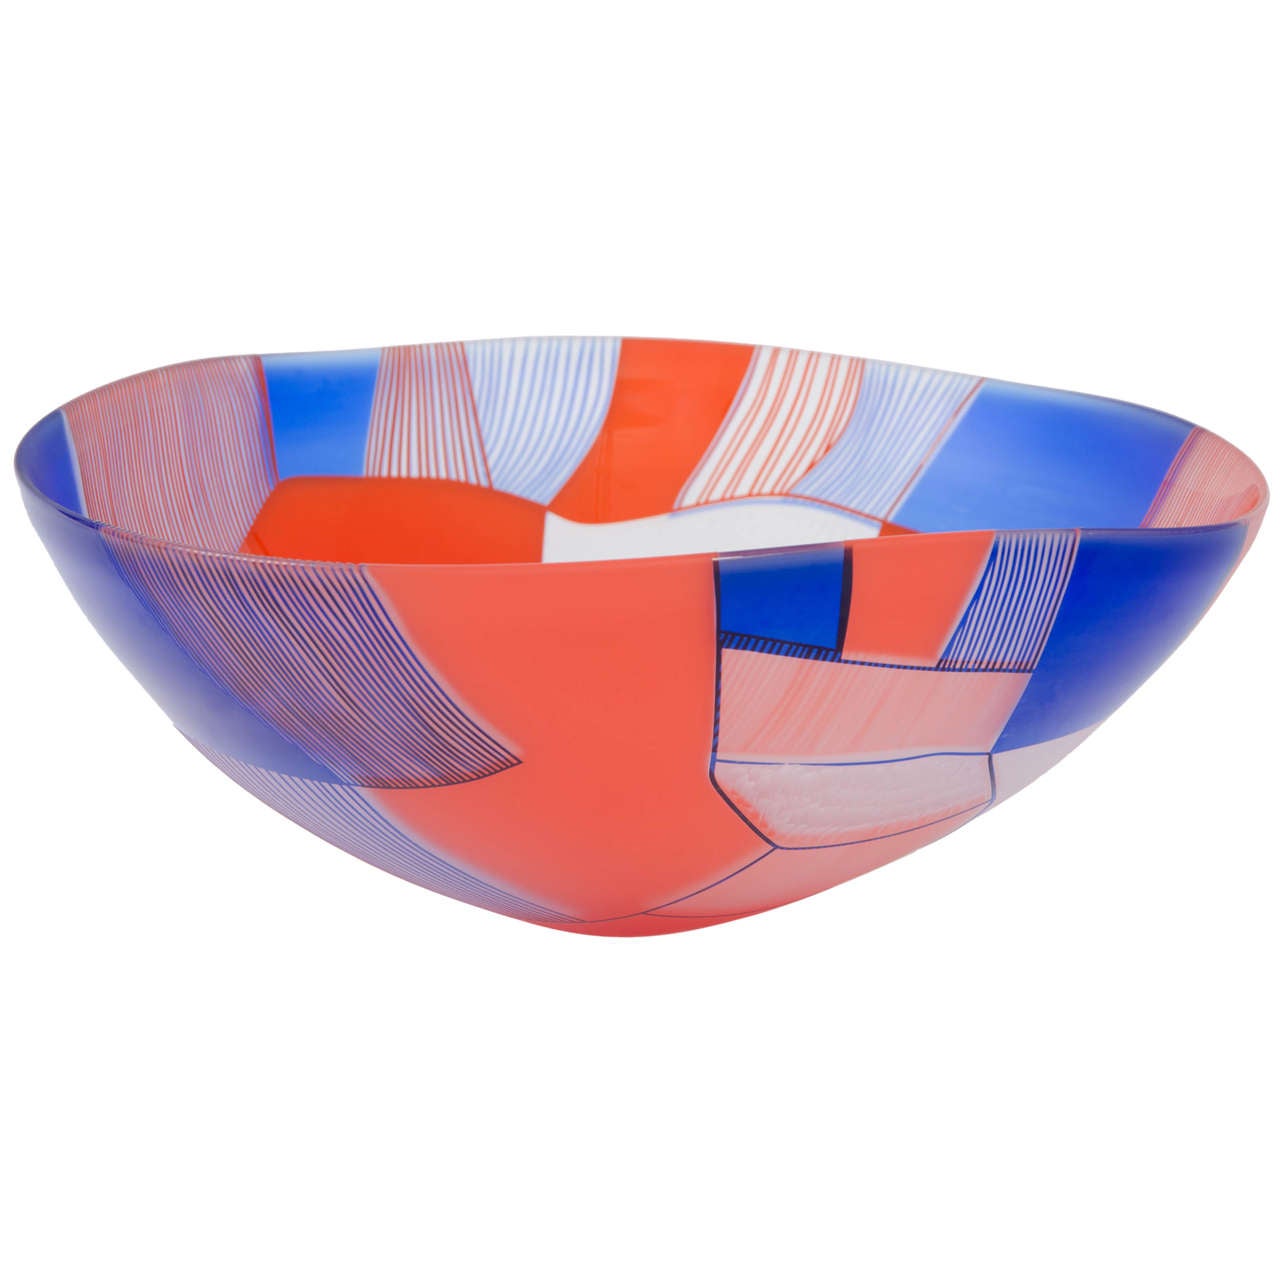 Landscape Study Blue Over Red bowl, art glass centrepiece by Kate Jones 